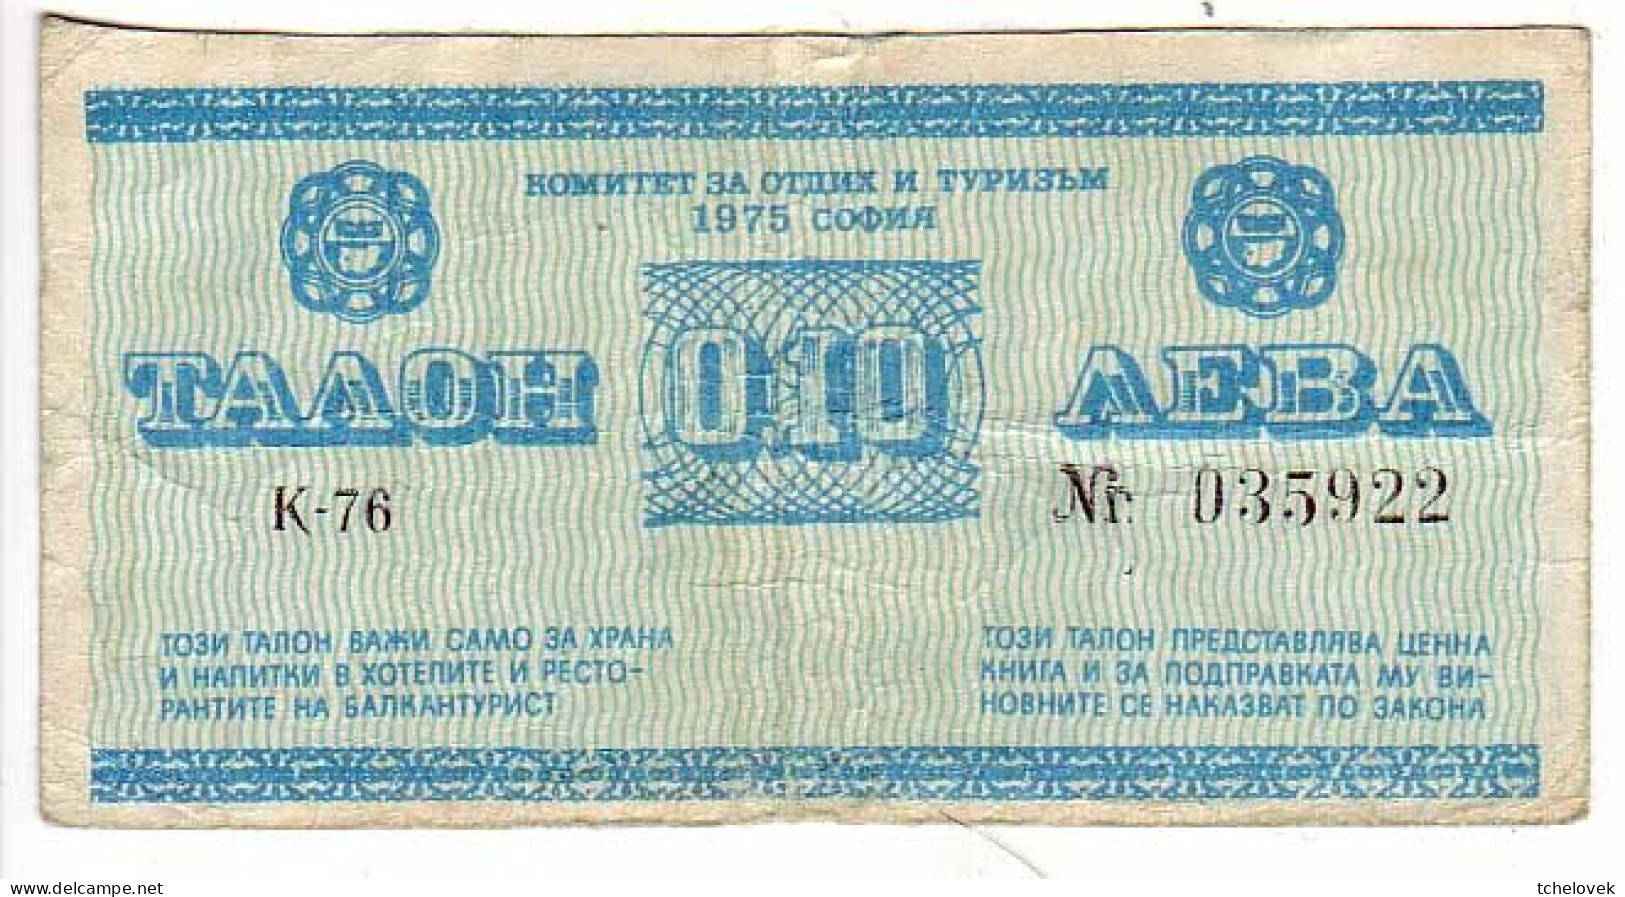 (Billets). Bulgarie Bulgaria. Foreing Exchange Certificate. Rare. Balkan Tourist. 1975. 0.10 Leva Serie K-76 N° 035922 - Bulgaria